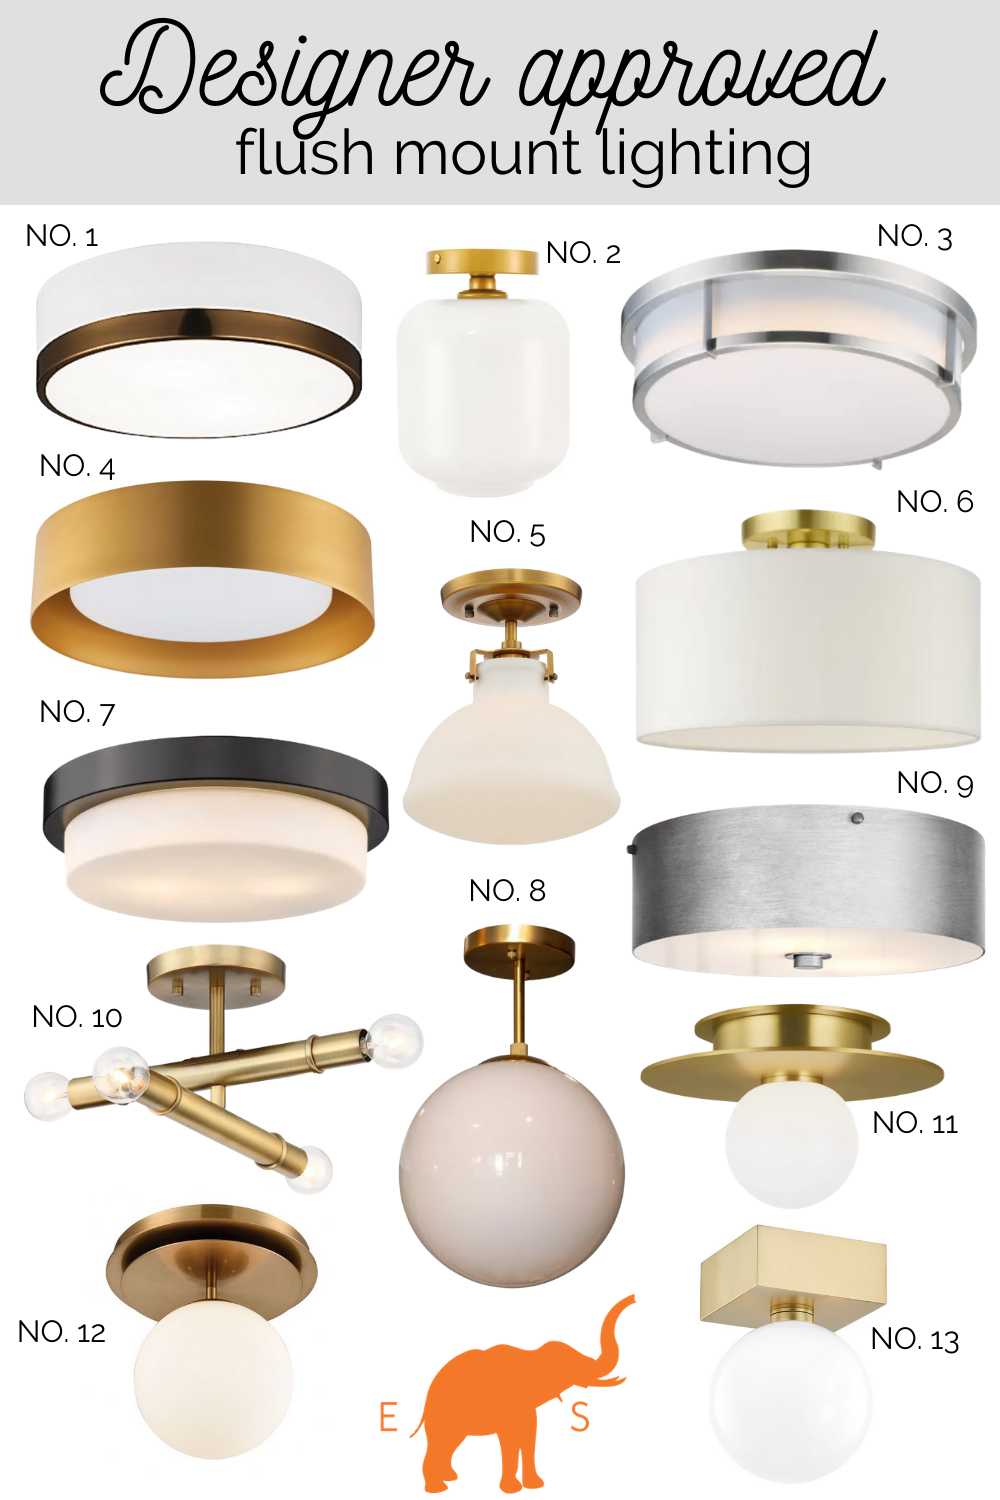 designer-approved-flush-mount-lighting-options-product-round-up